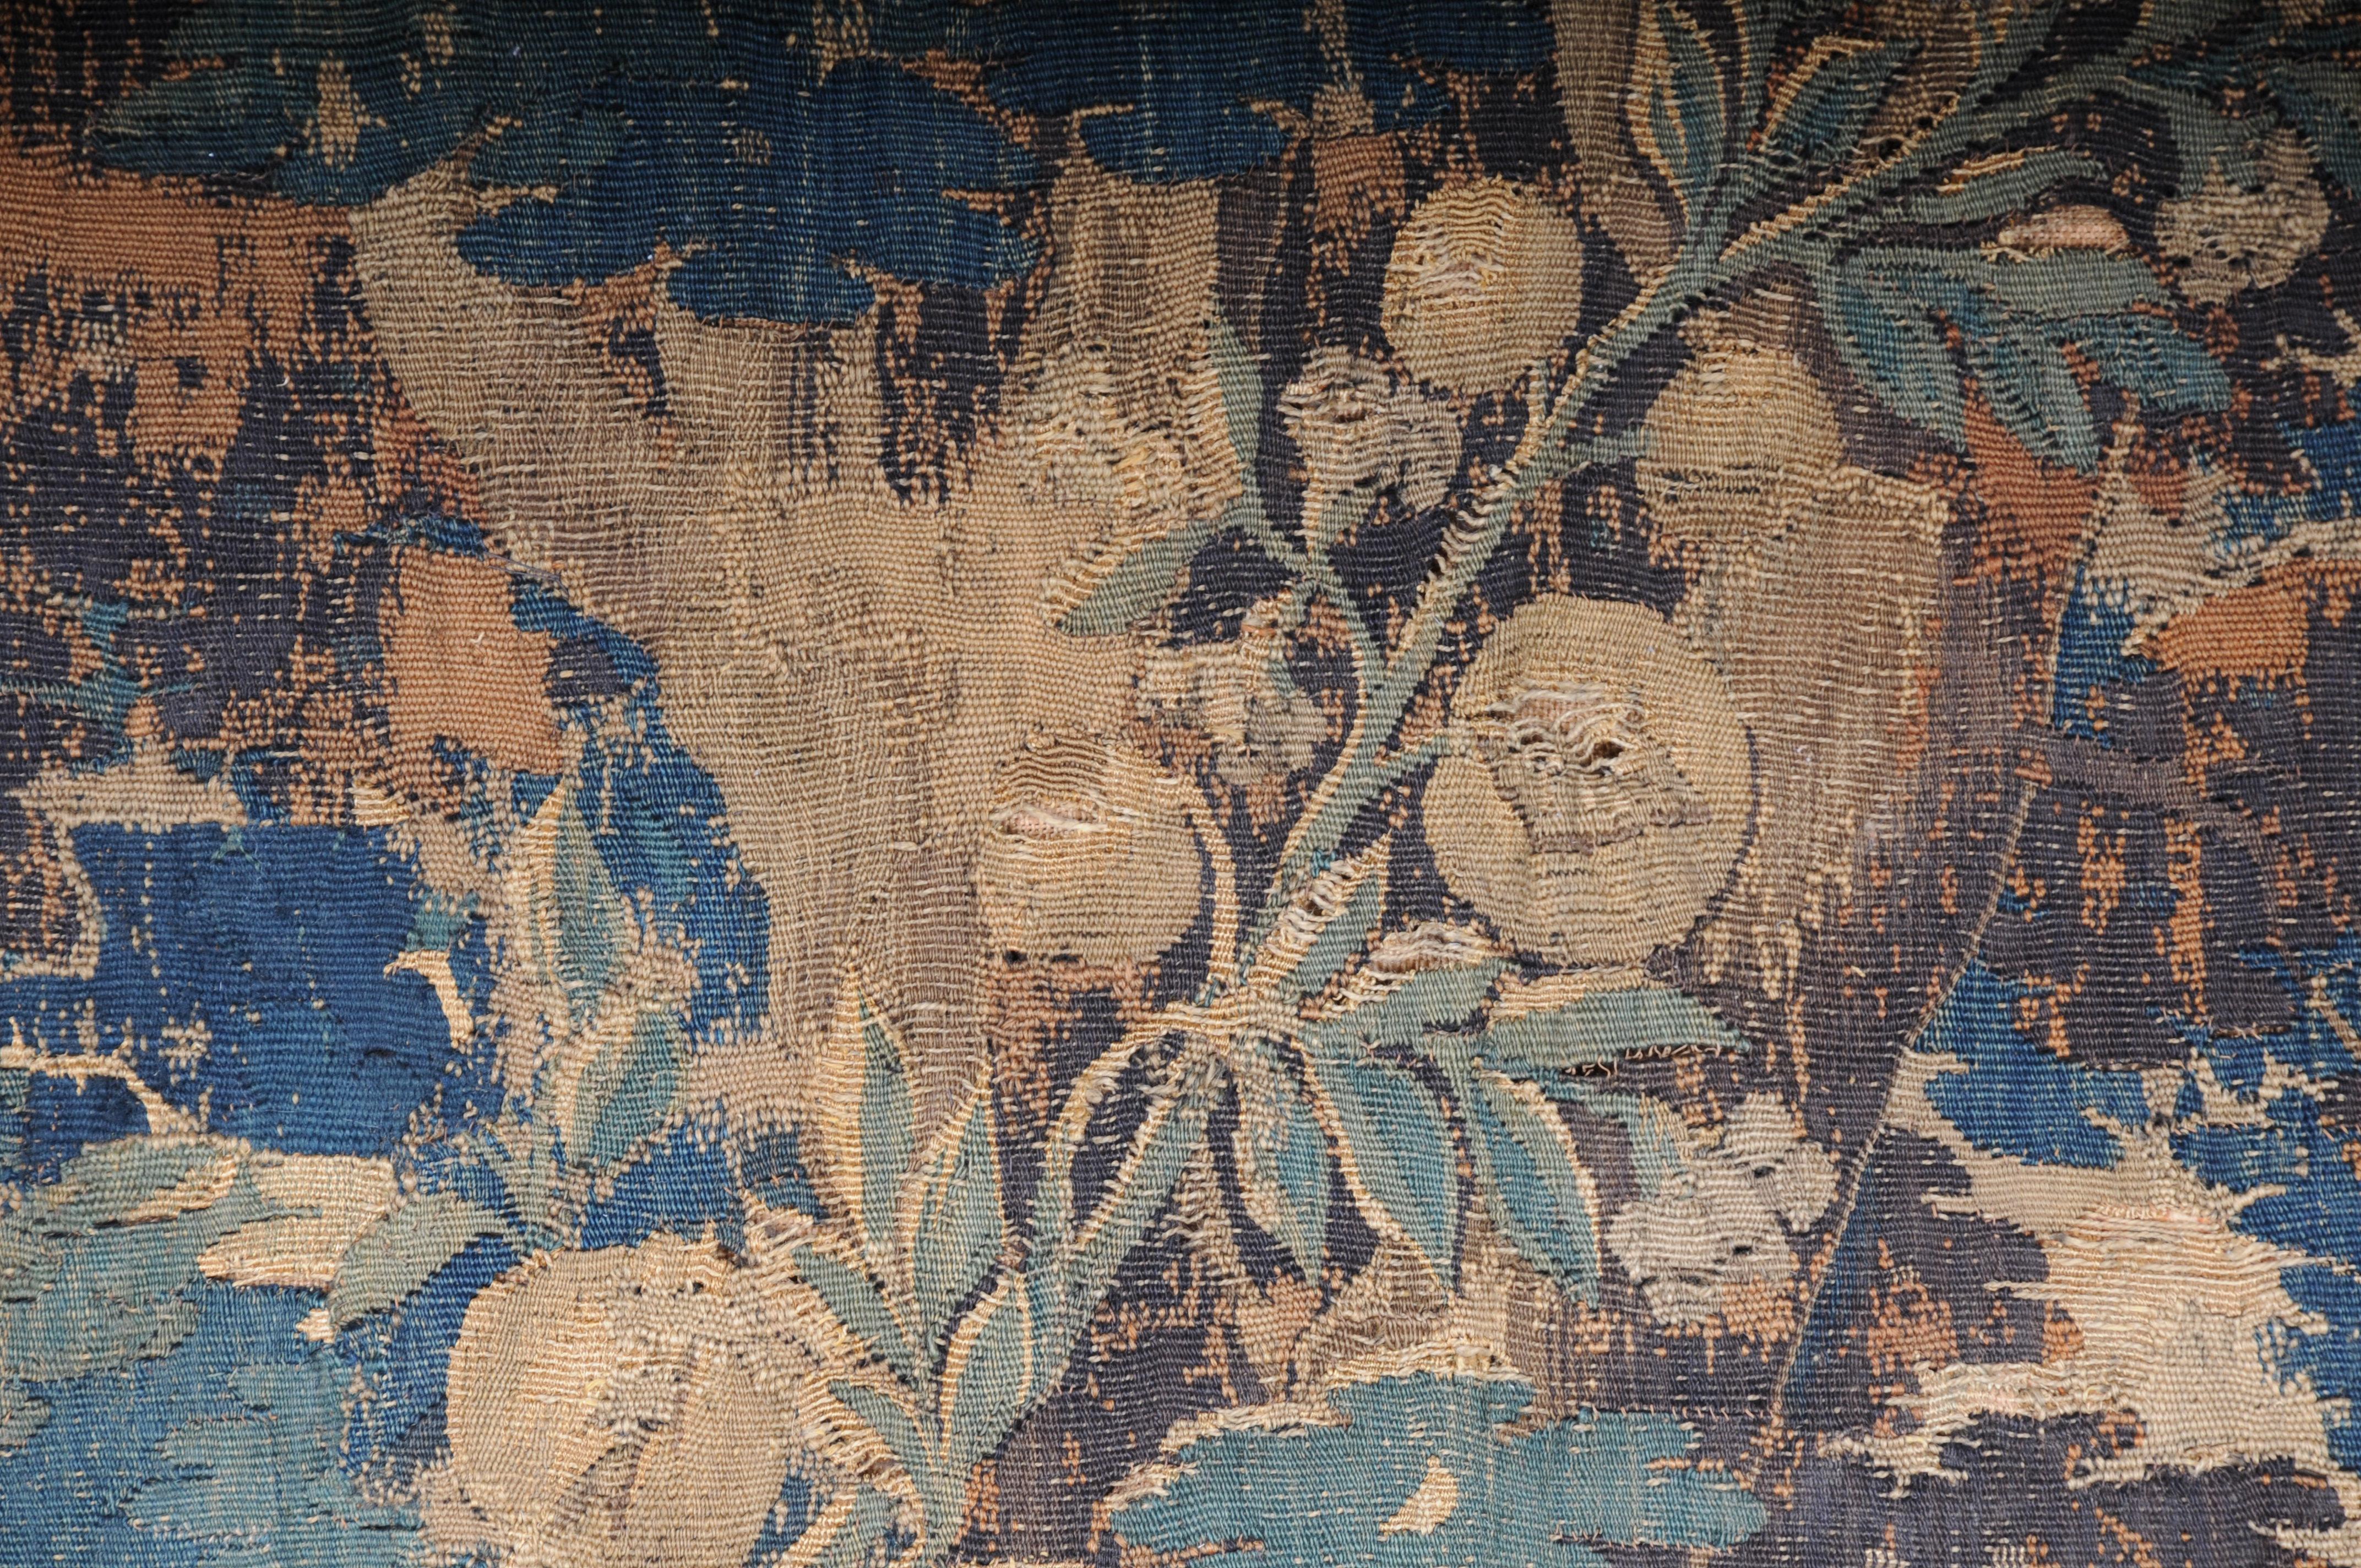 Antique Aubosson/Gobelein wall carpet, France 17th century. Verdure motif, silk For Sale 2